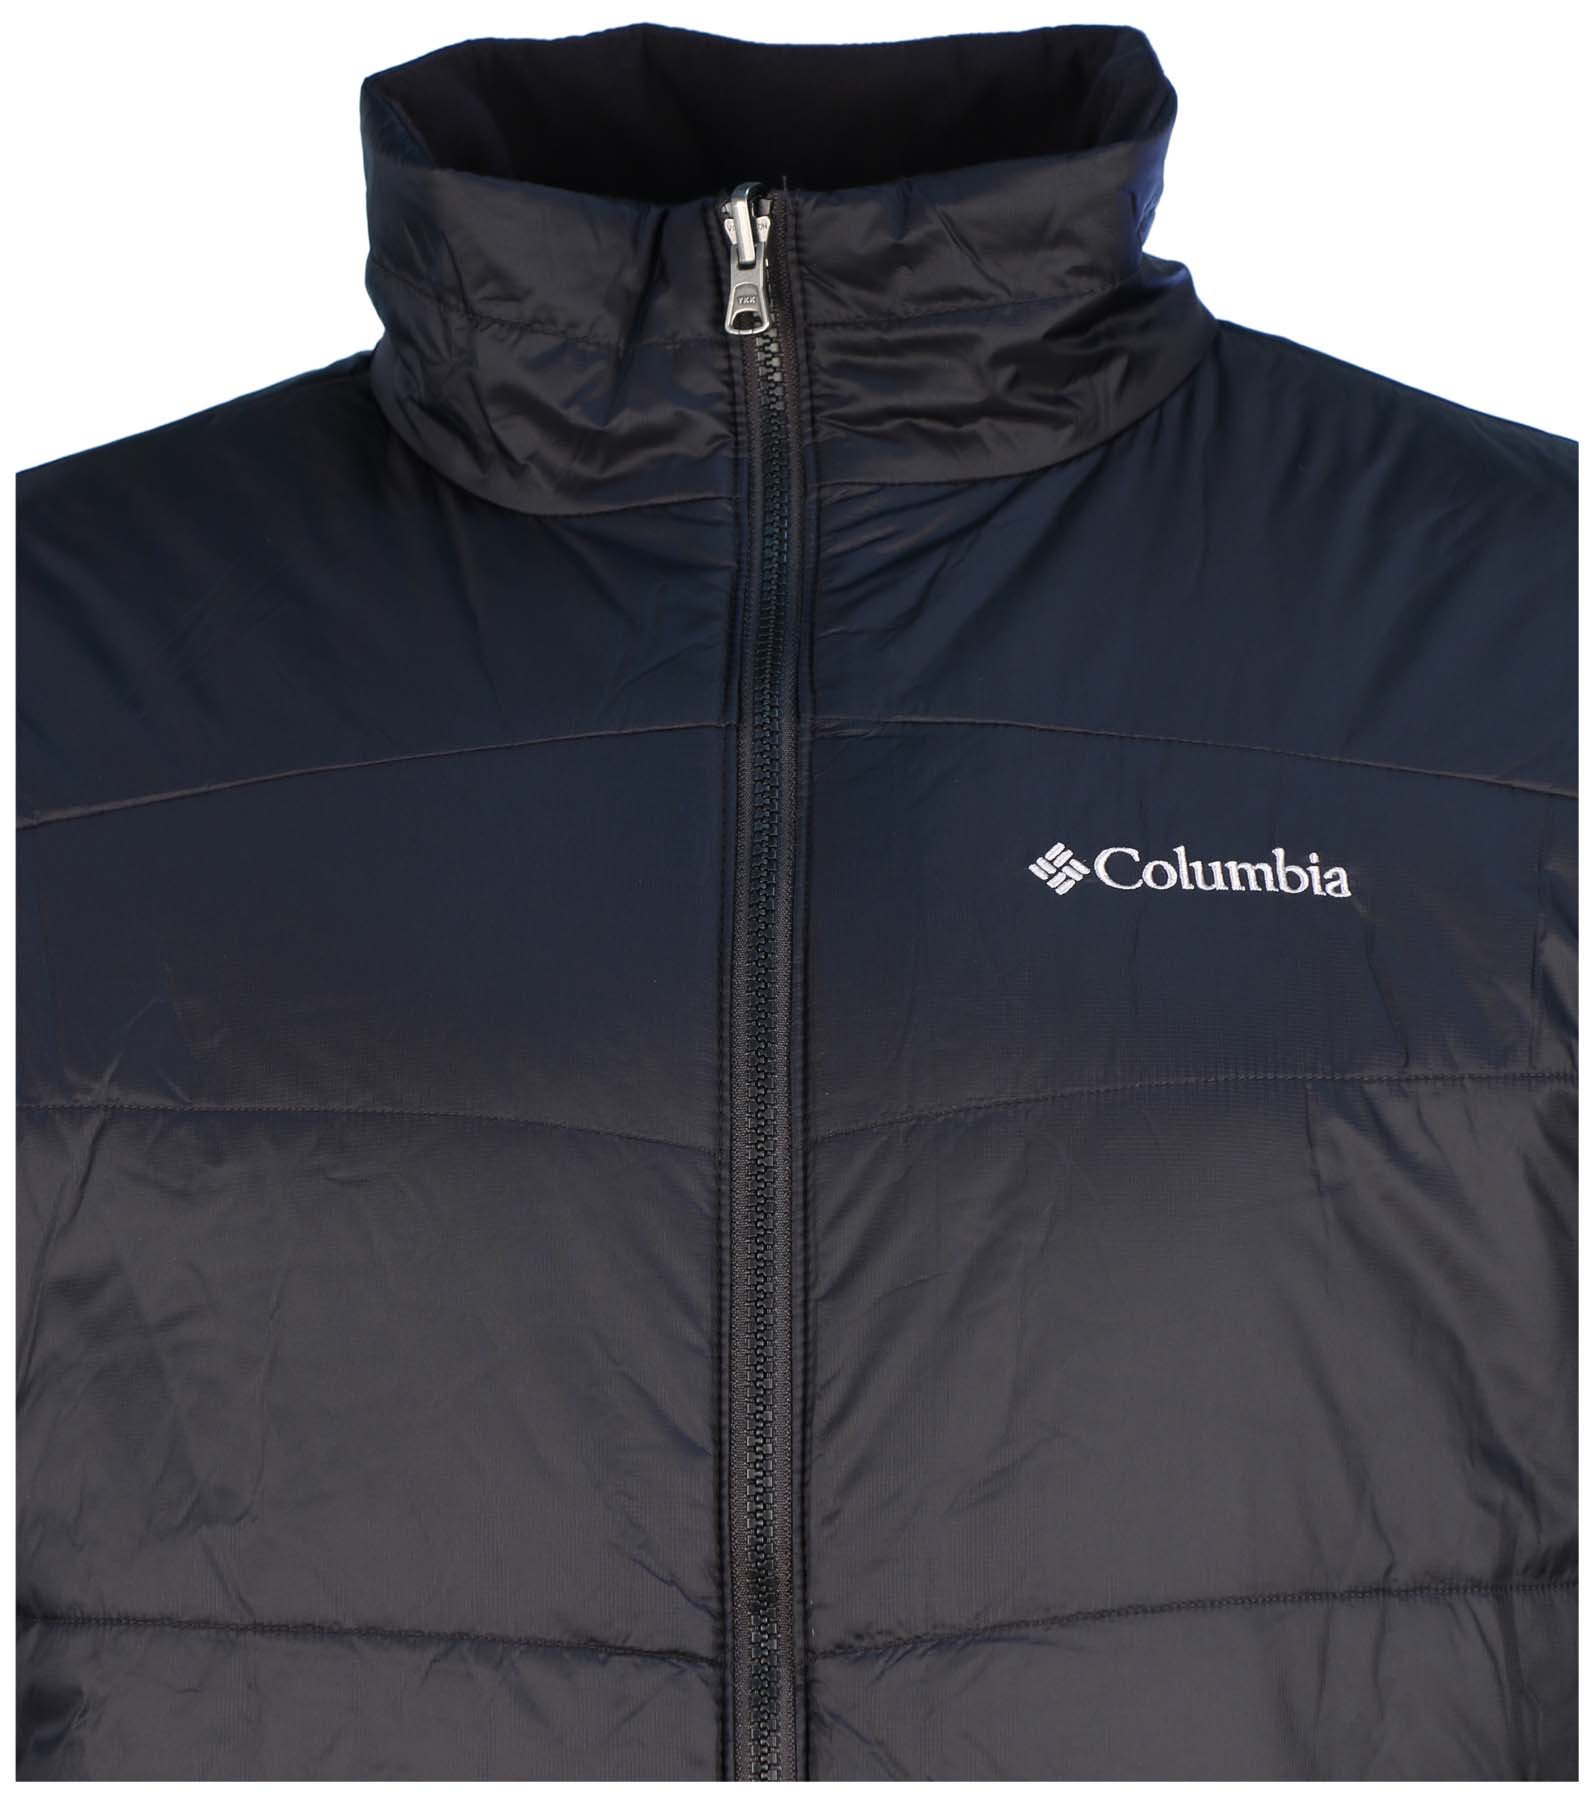 Columbia Men's Rural Mountain II Interchange Jacket | eBay